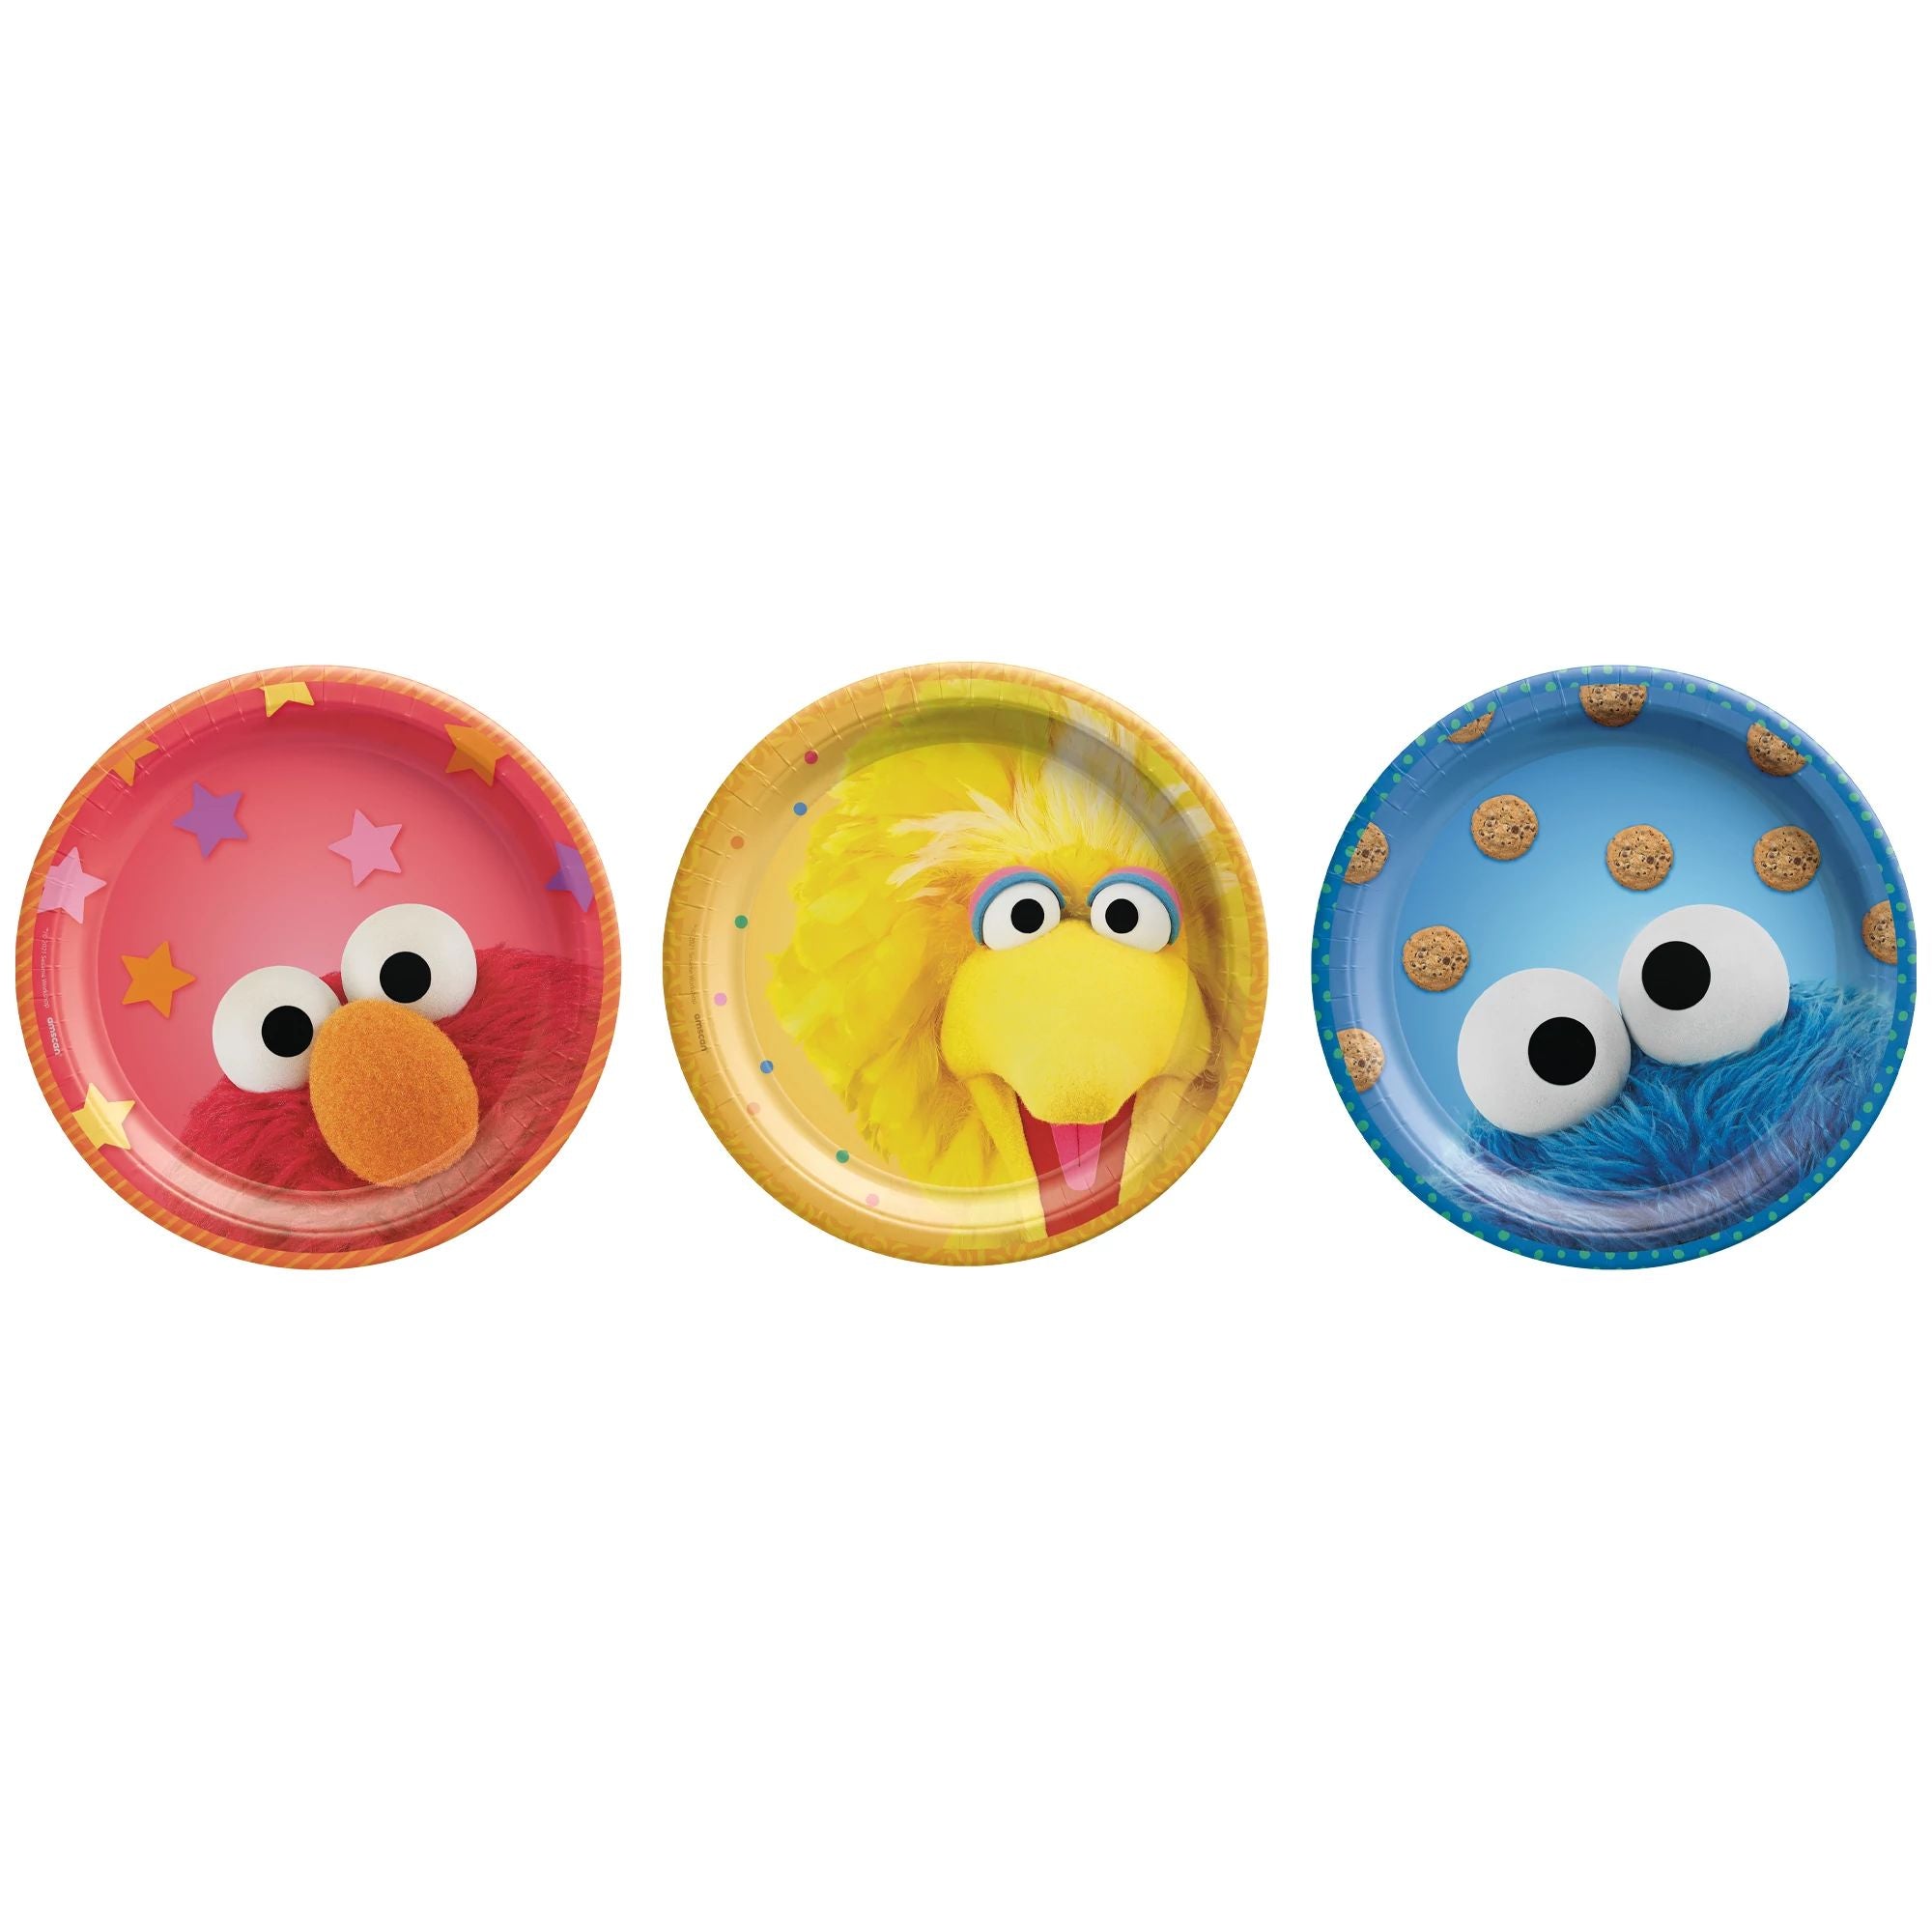 Sesame Street 7in Round Plates 8ct | Kid's Birthday